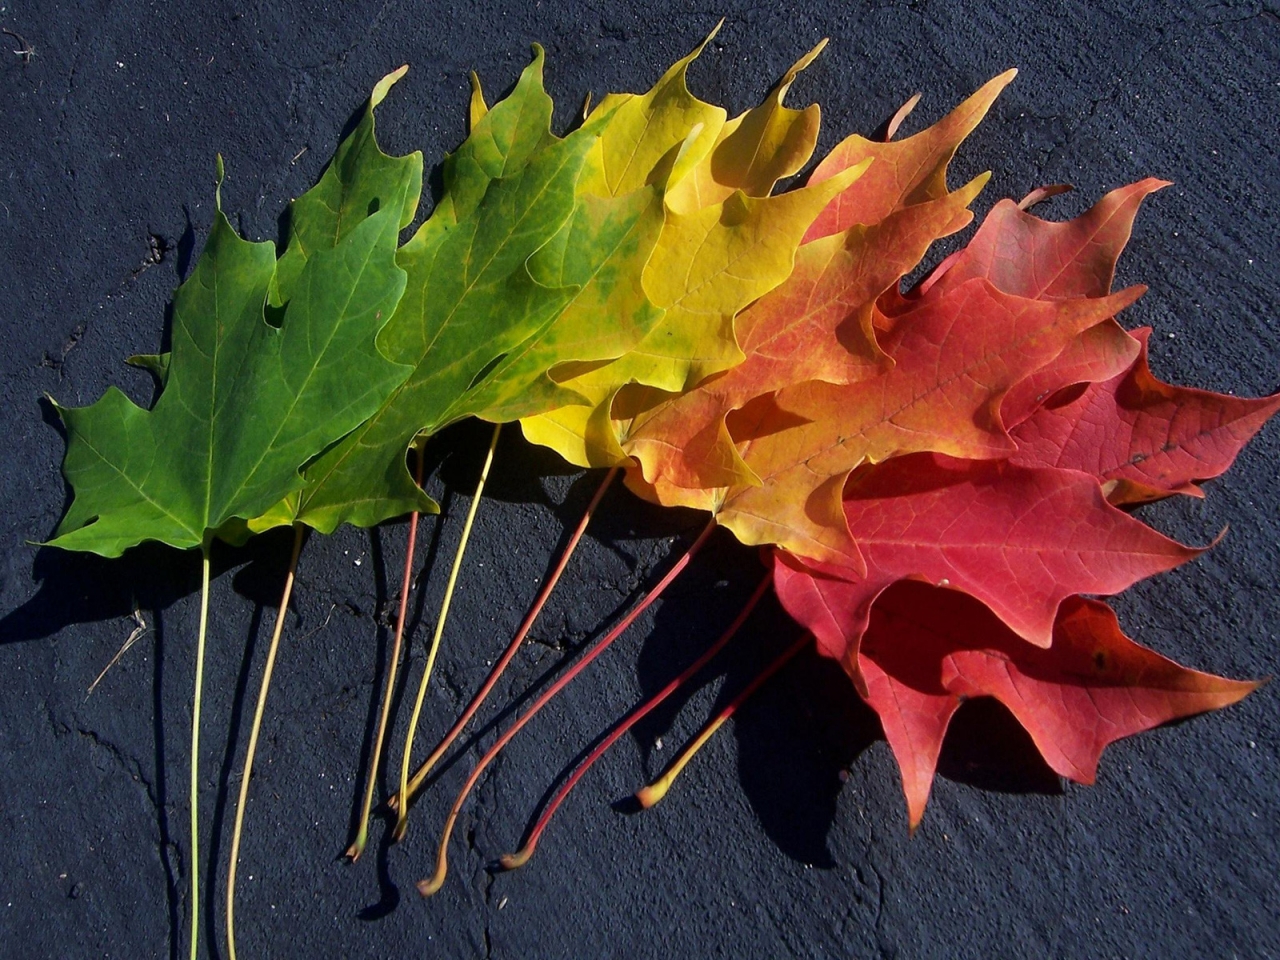 Spectrumn of Autumn for 1280 x 960 resolution